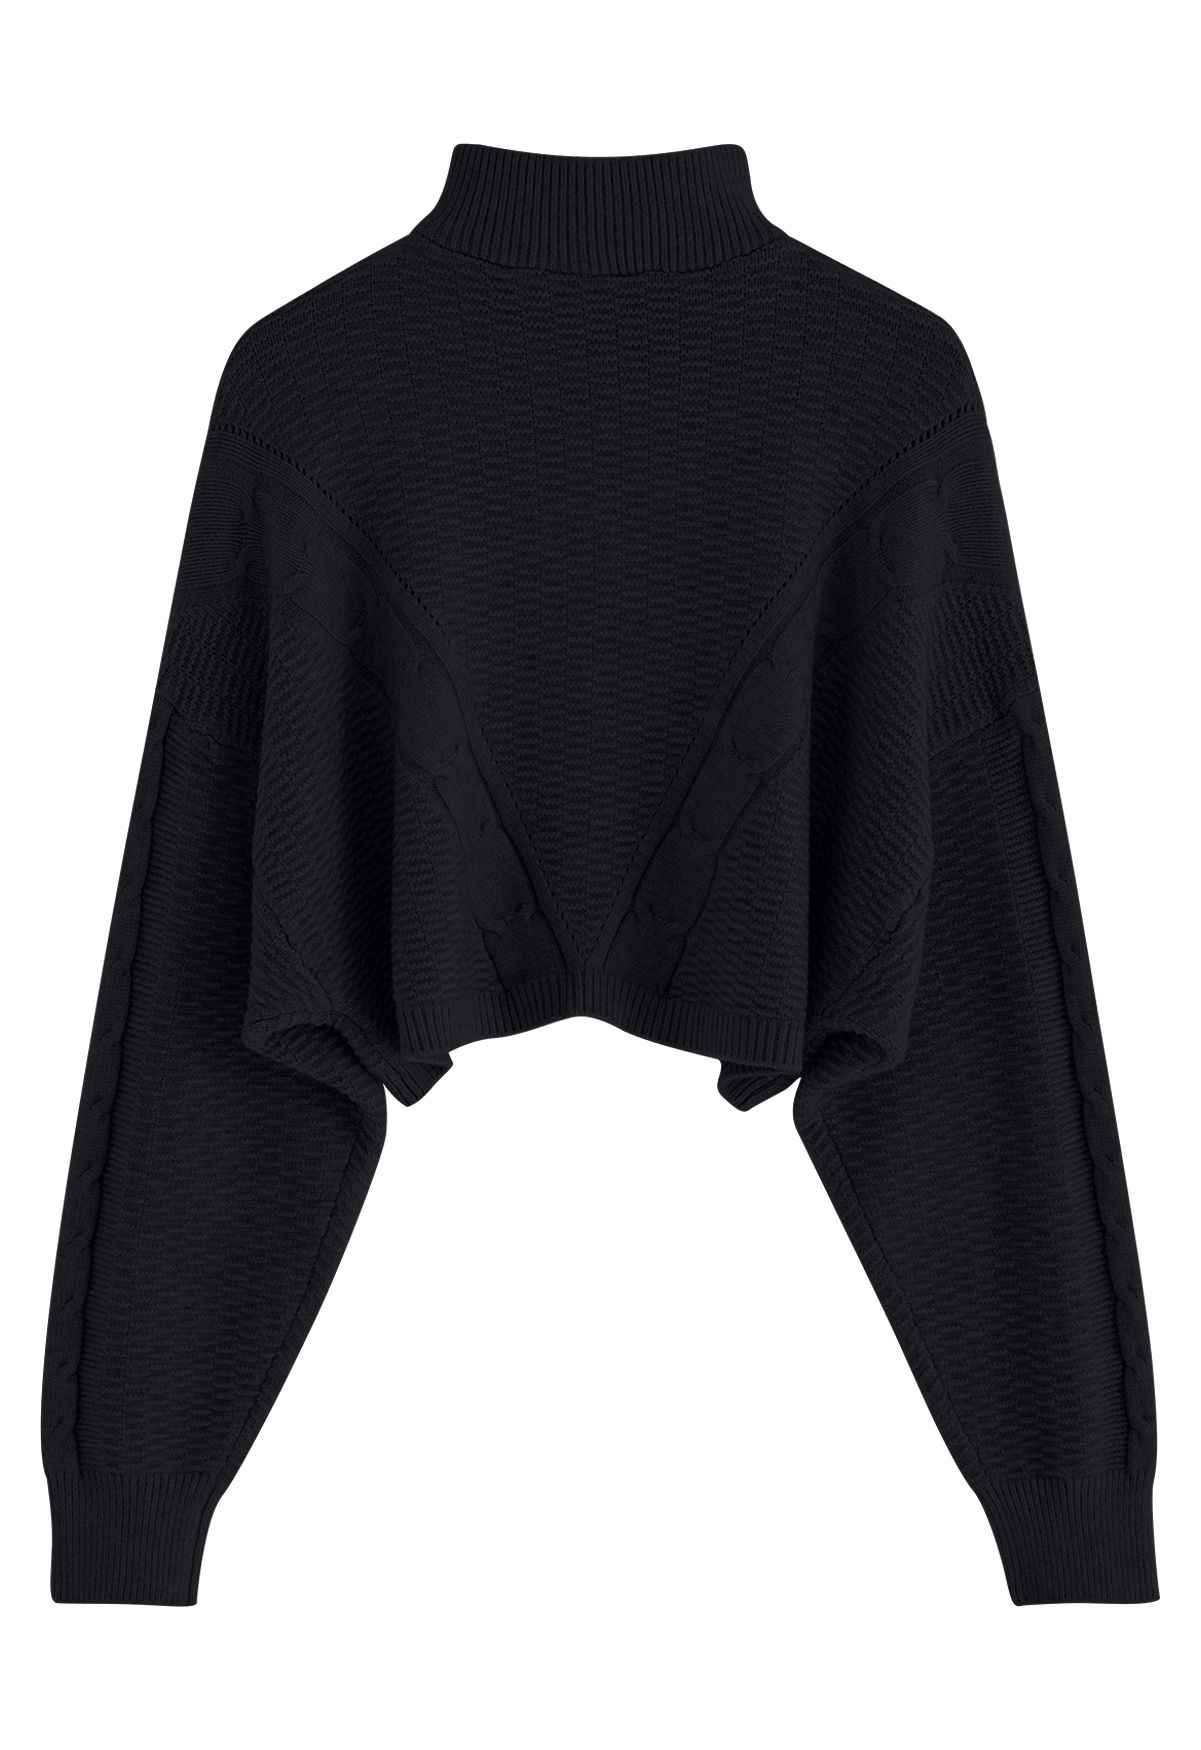 Zipper Neck Embossed Braided Knit Crop Top in Black